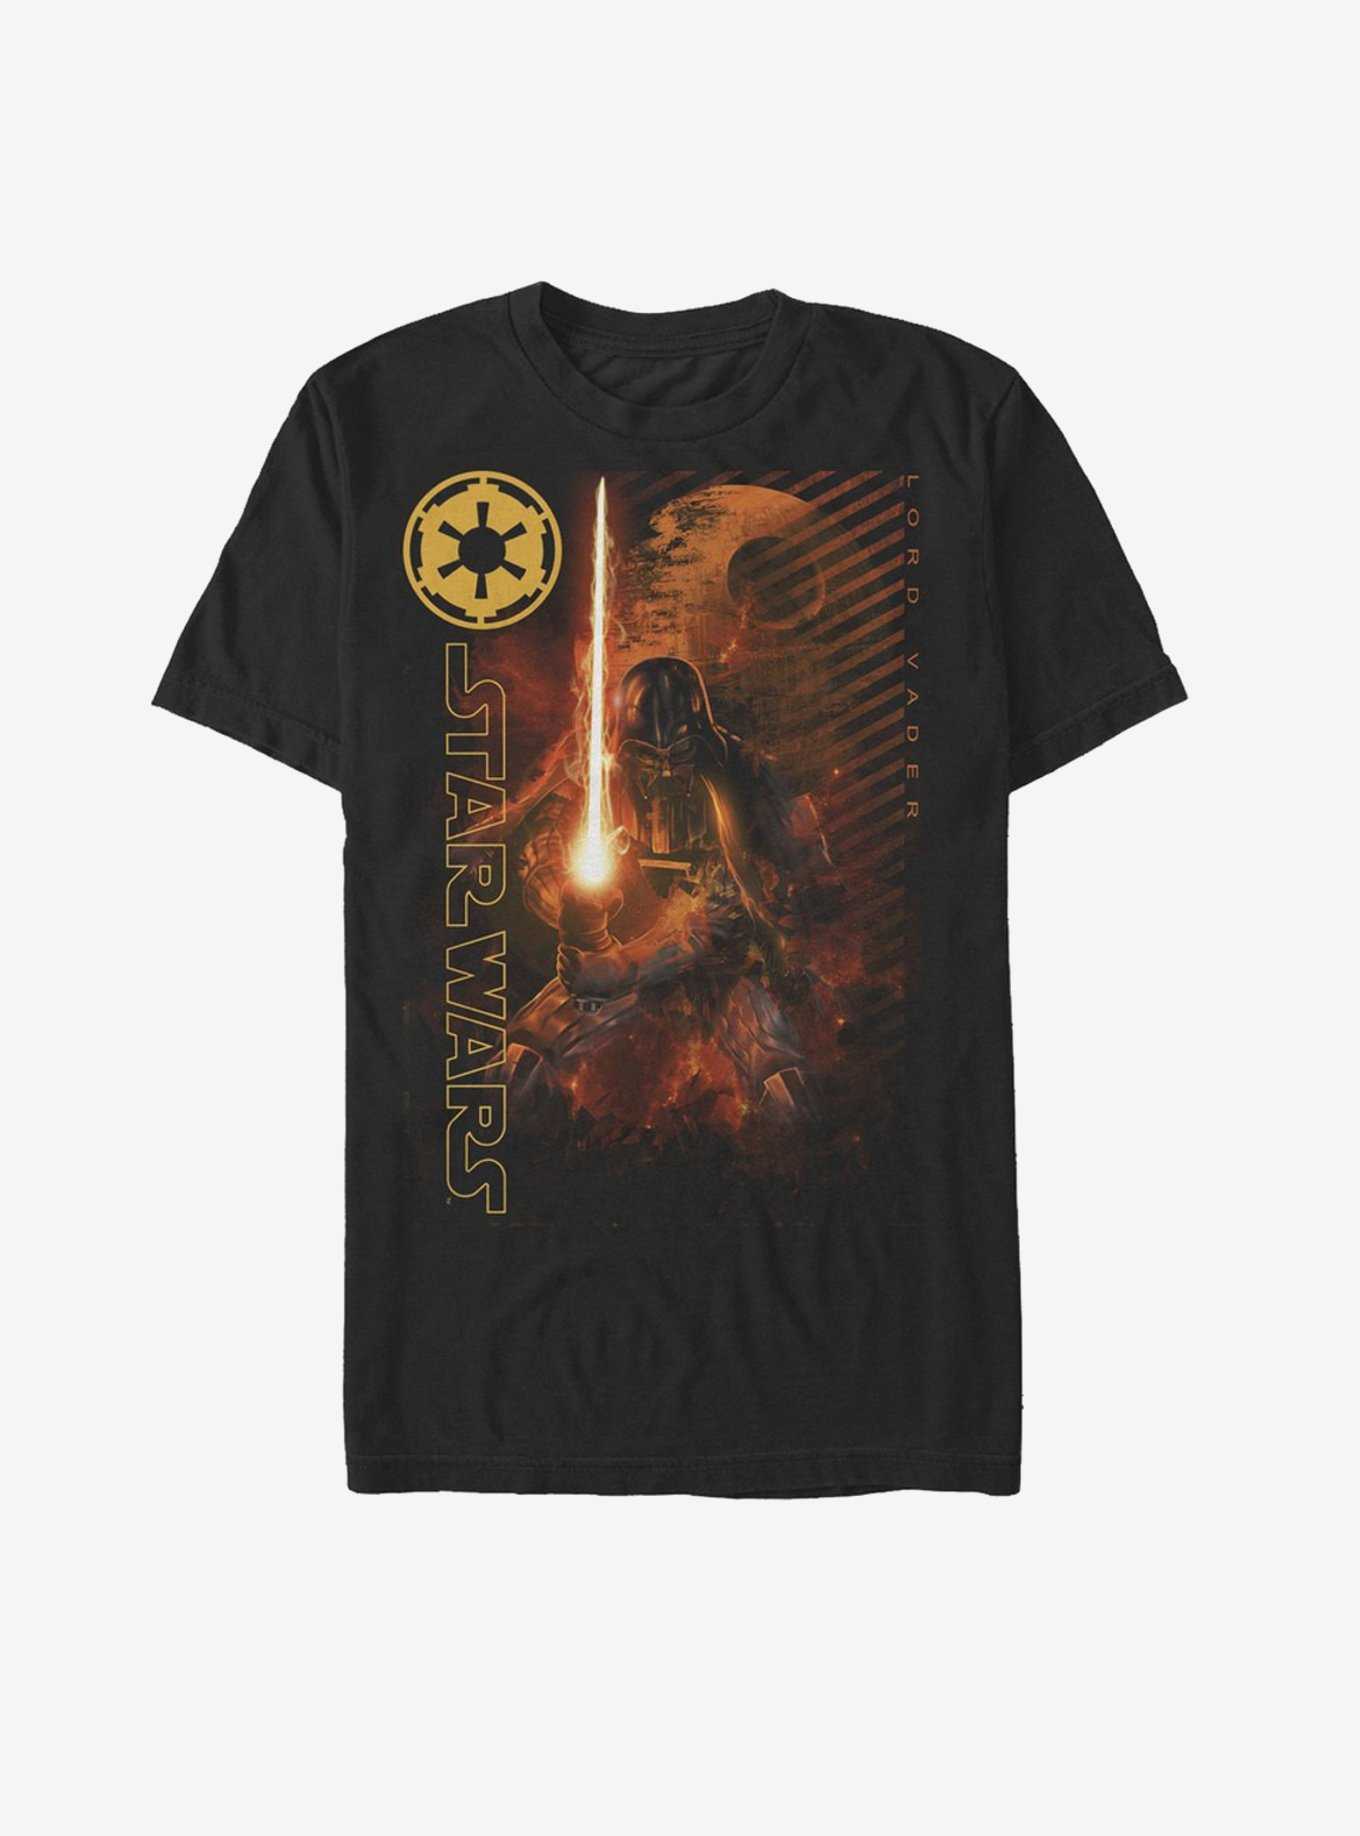 Star Wars Darth Vader Fire T-Shirt, , hi-res